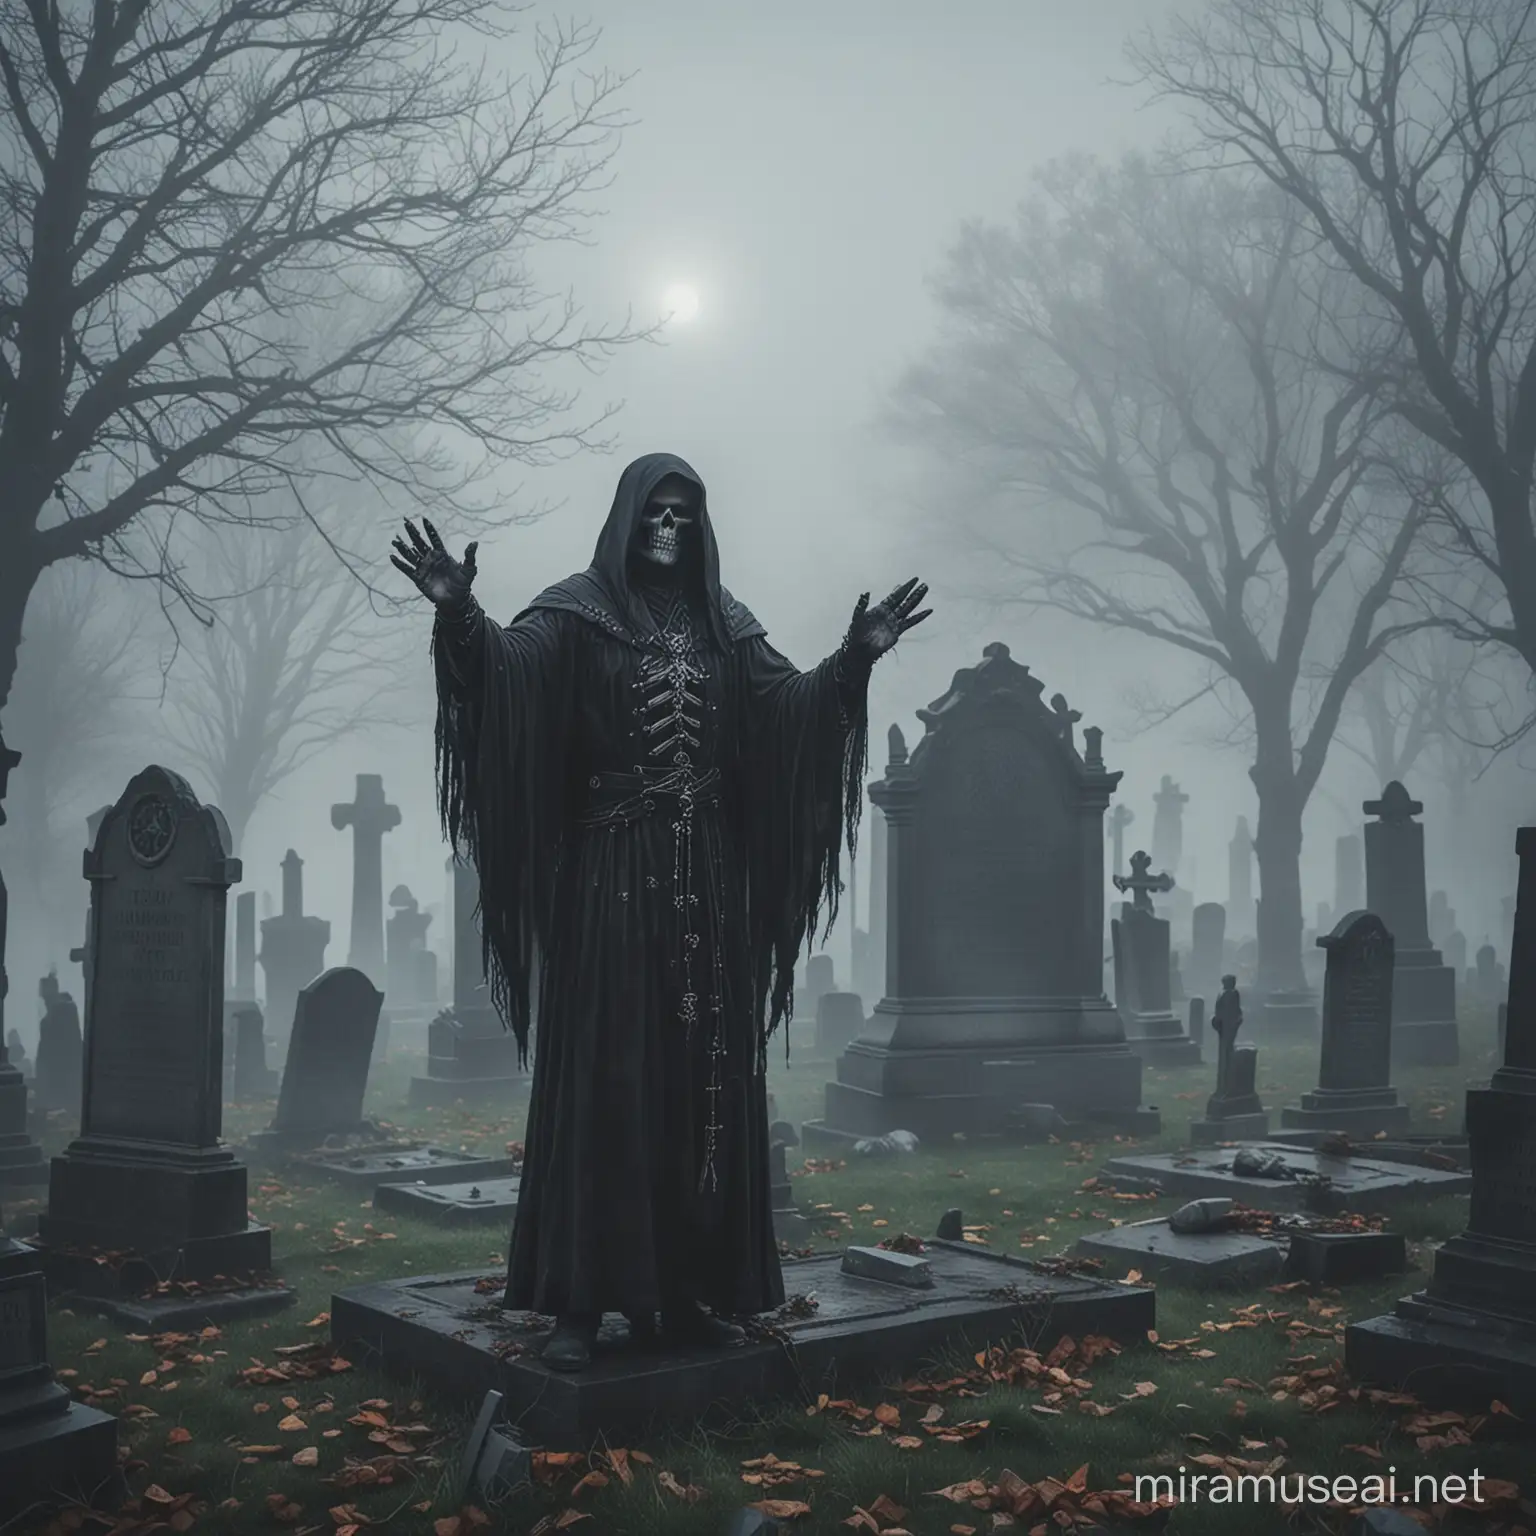 Mystic Necromancer Reviving Spirits in Eerie Cemetery